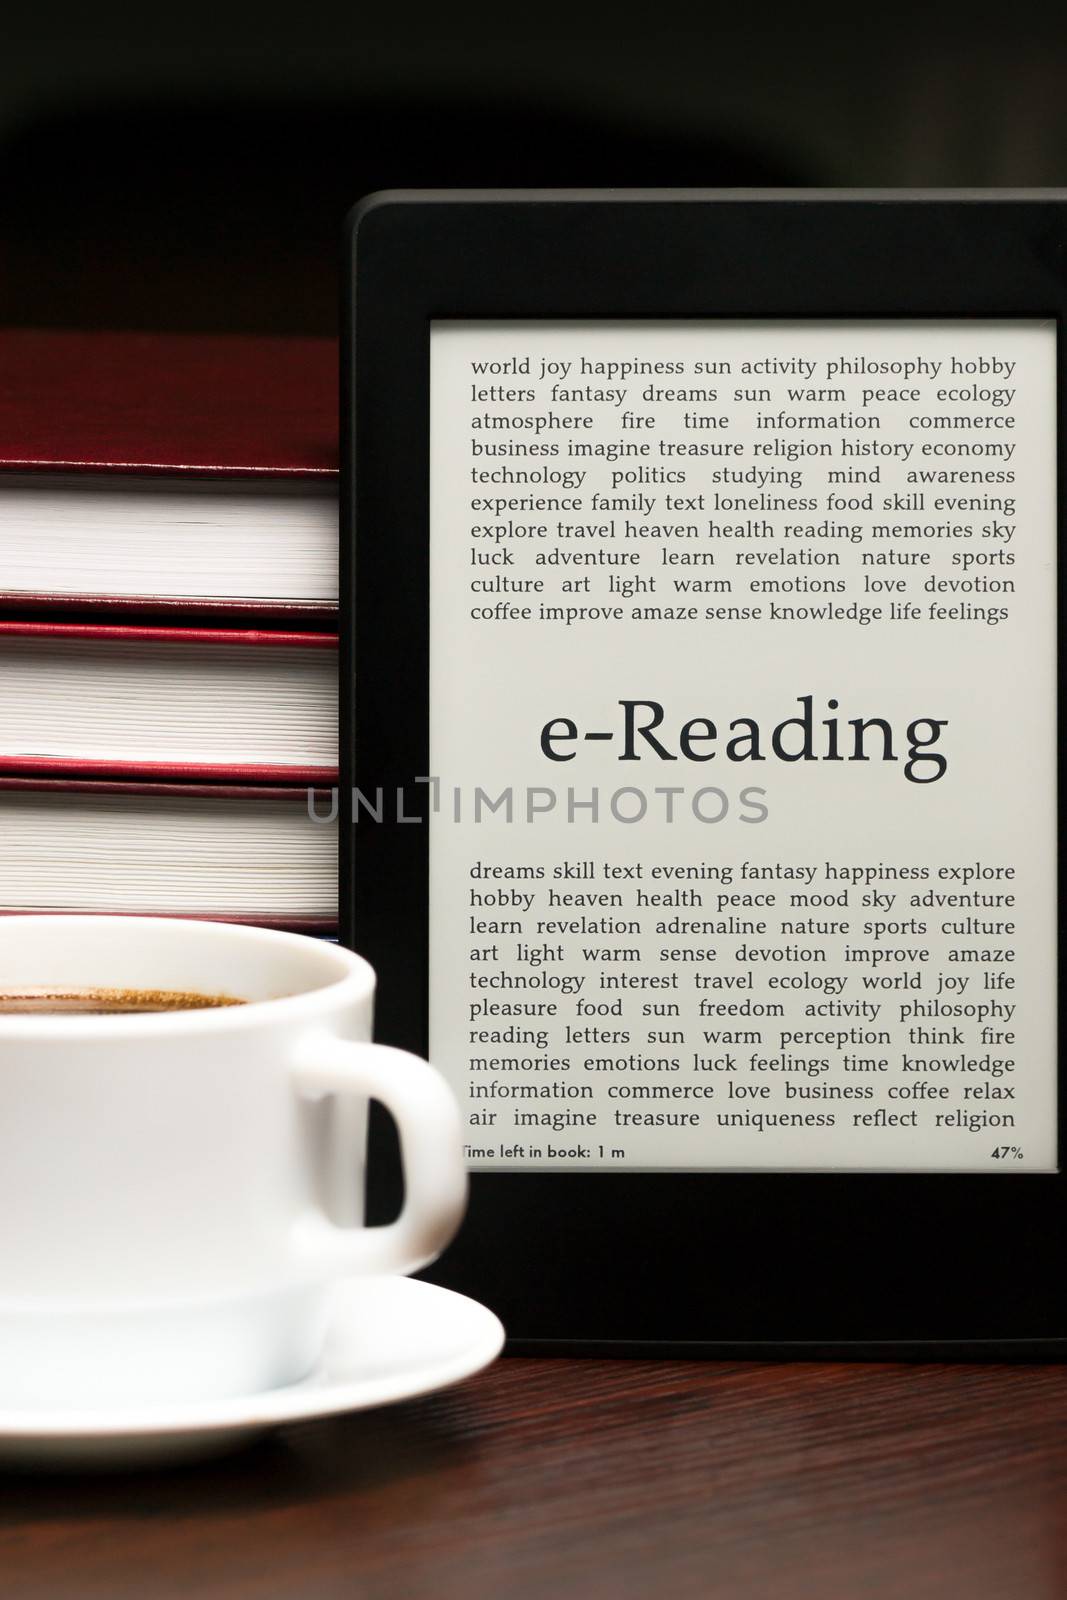 e-Reading by only4denn